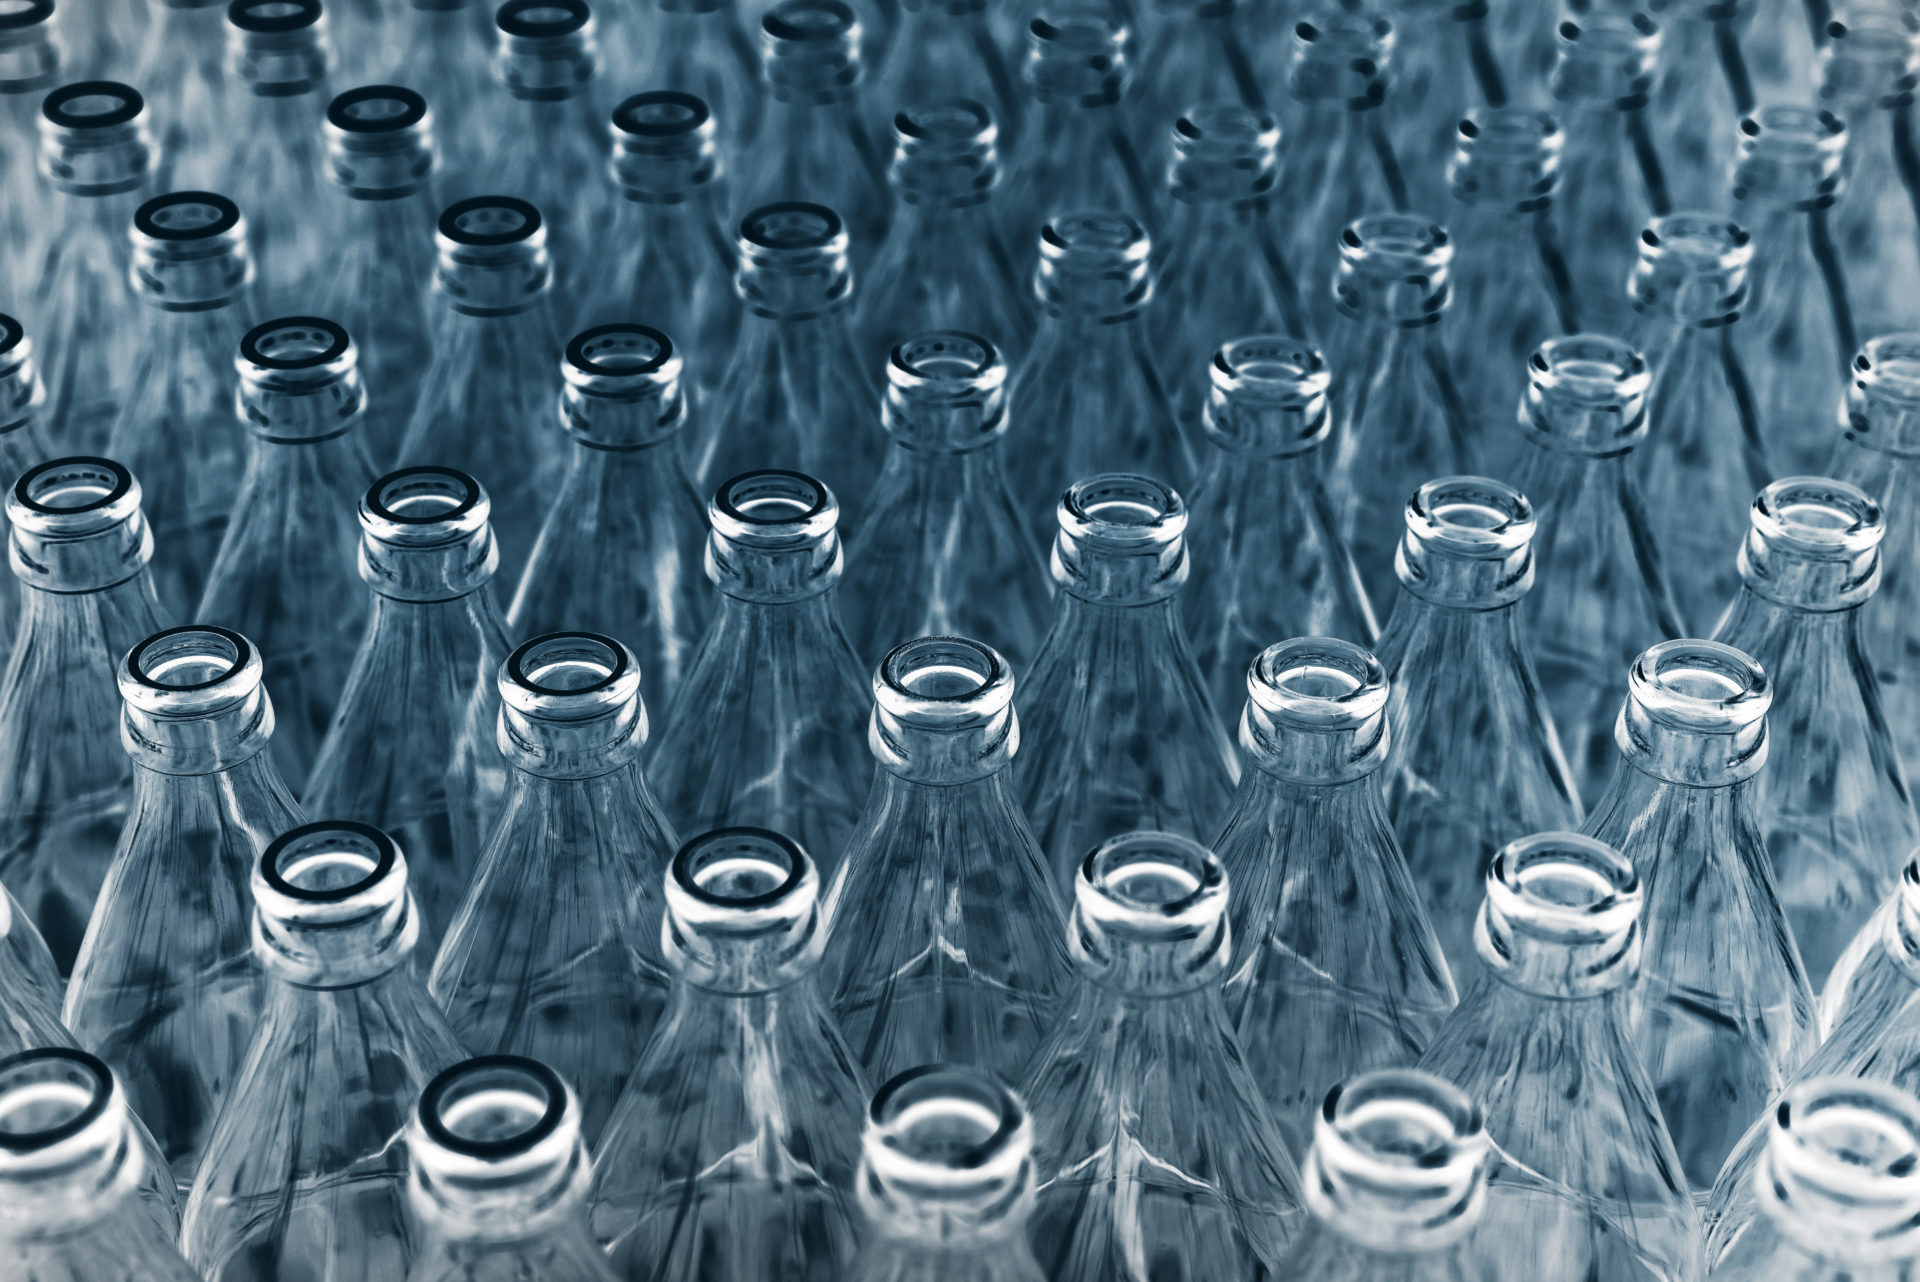 https://www.fundacionaquae.org/wp-content/uploads/2015/01/botellas-de-vidrio.jpg